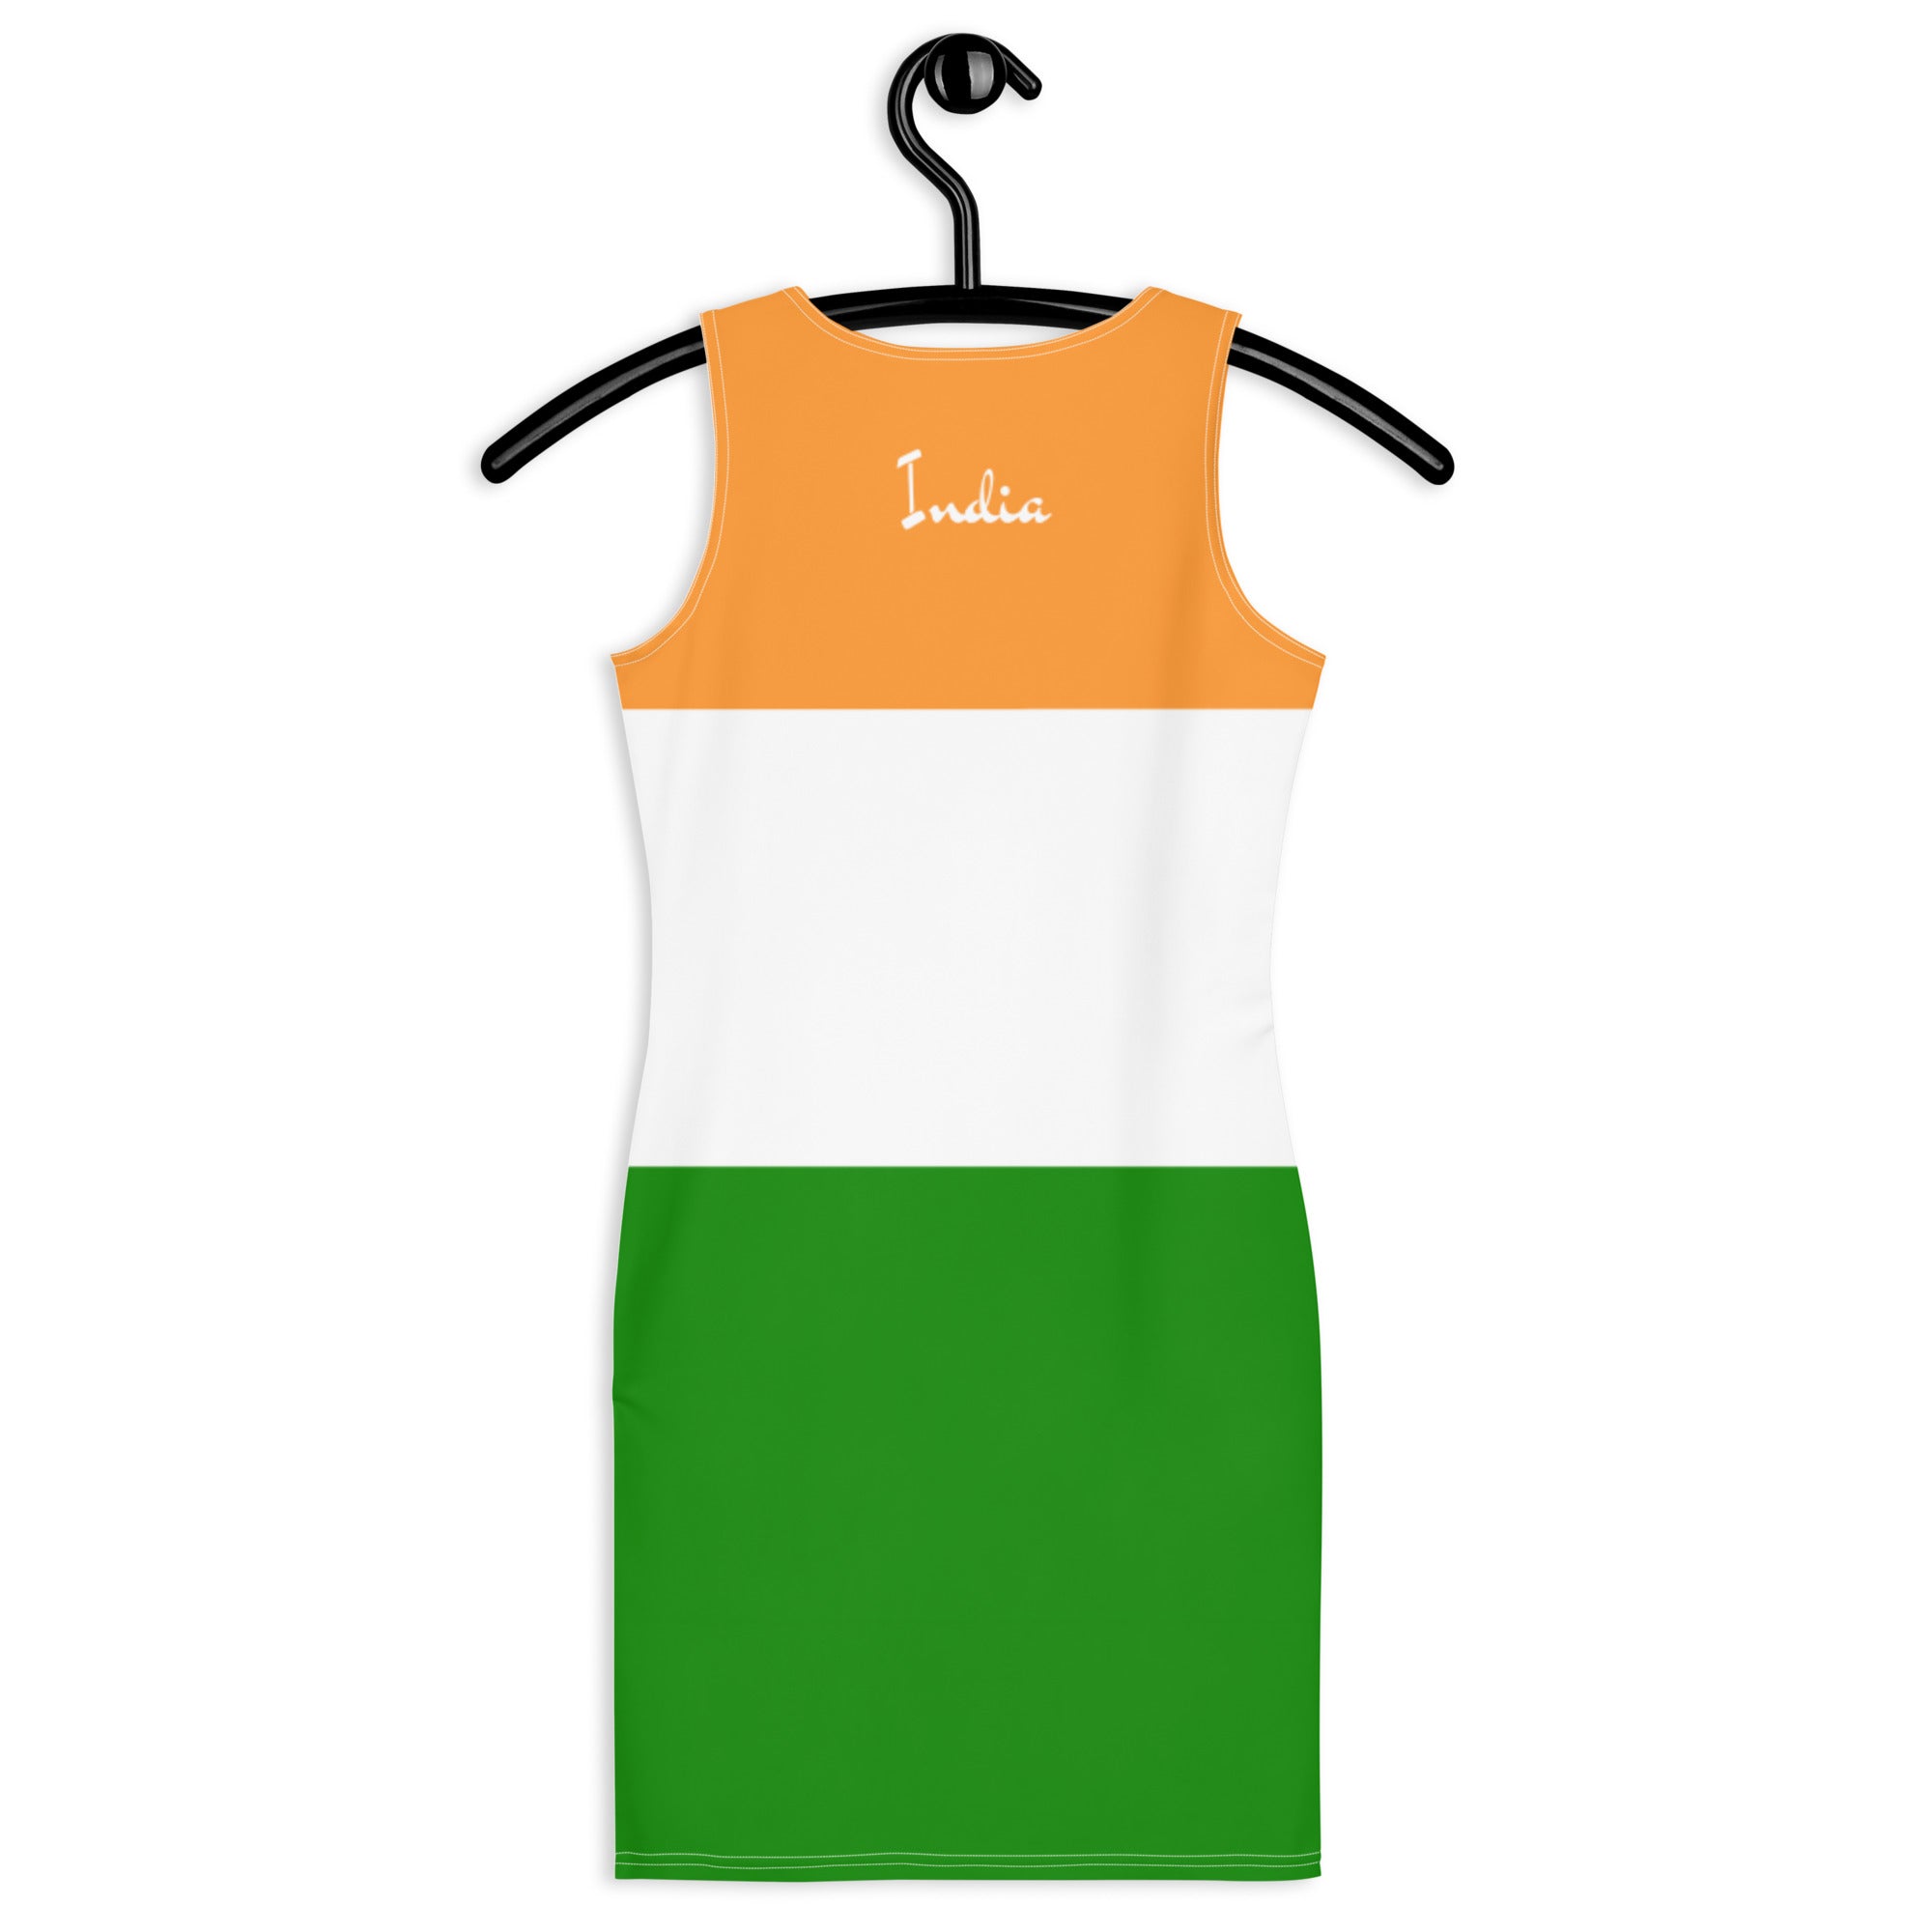 India | Indian Flag | National Flag of India